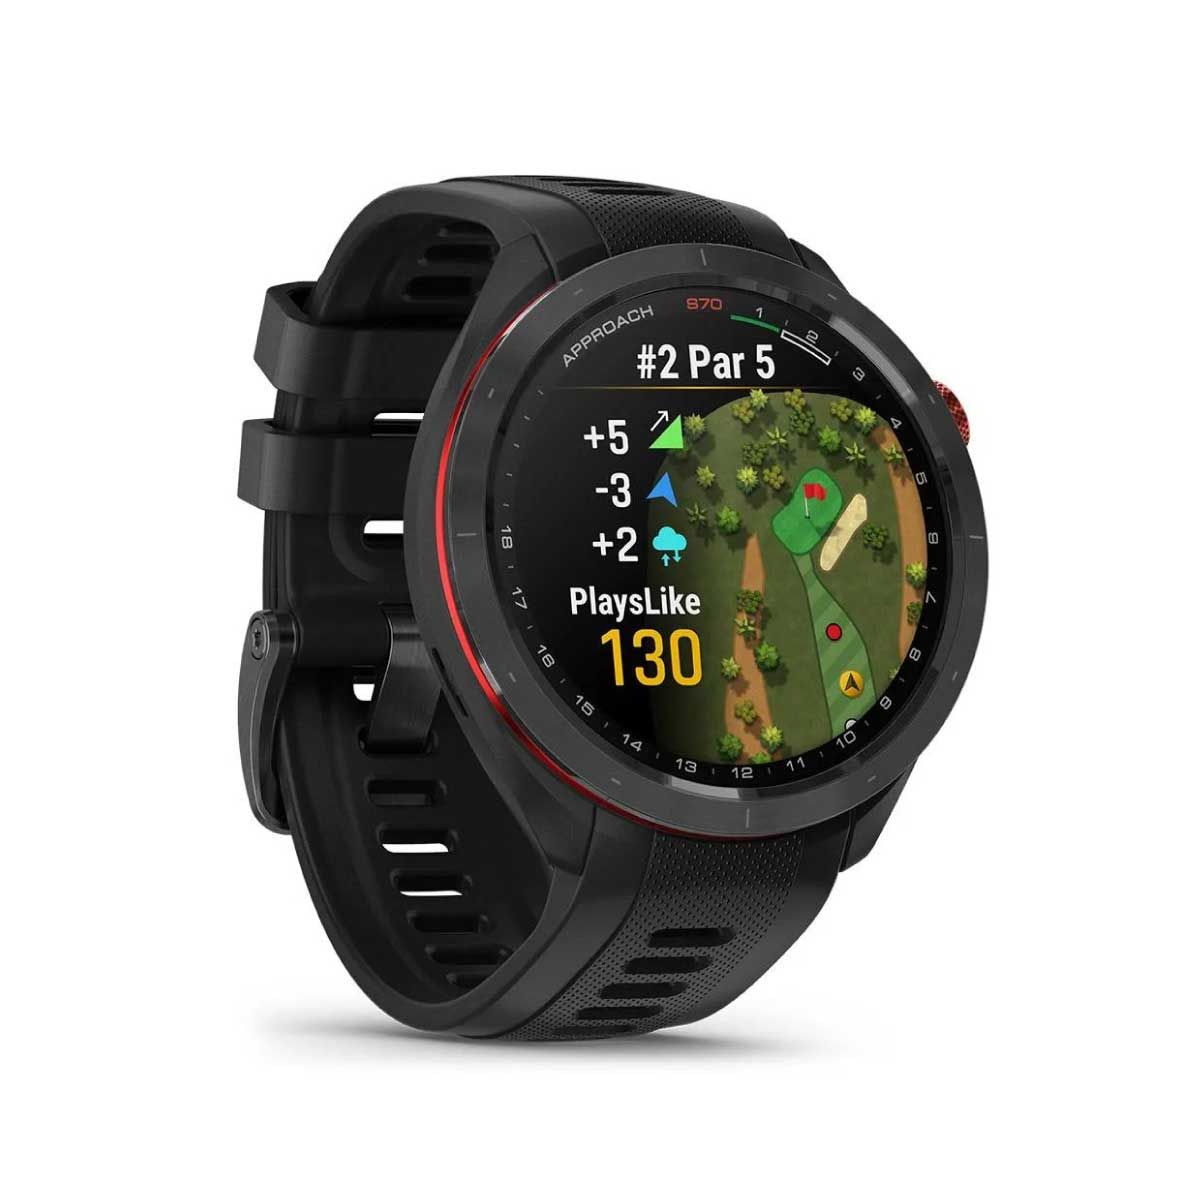 GARMIN Smart Watch รุ่น  Approach S70 - 47 mm Black